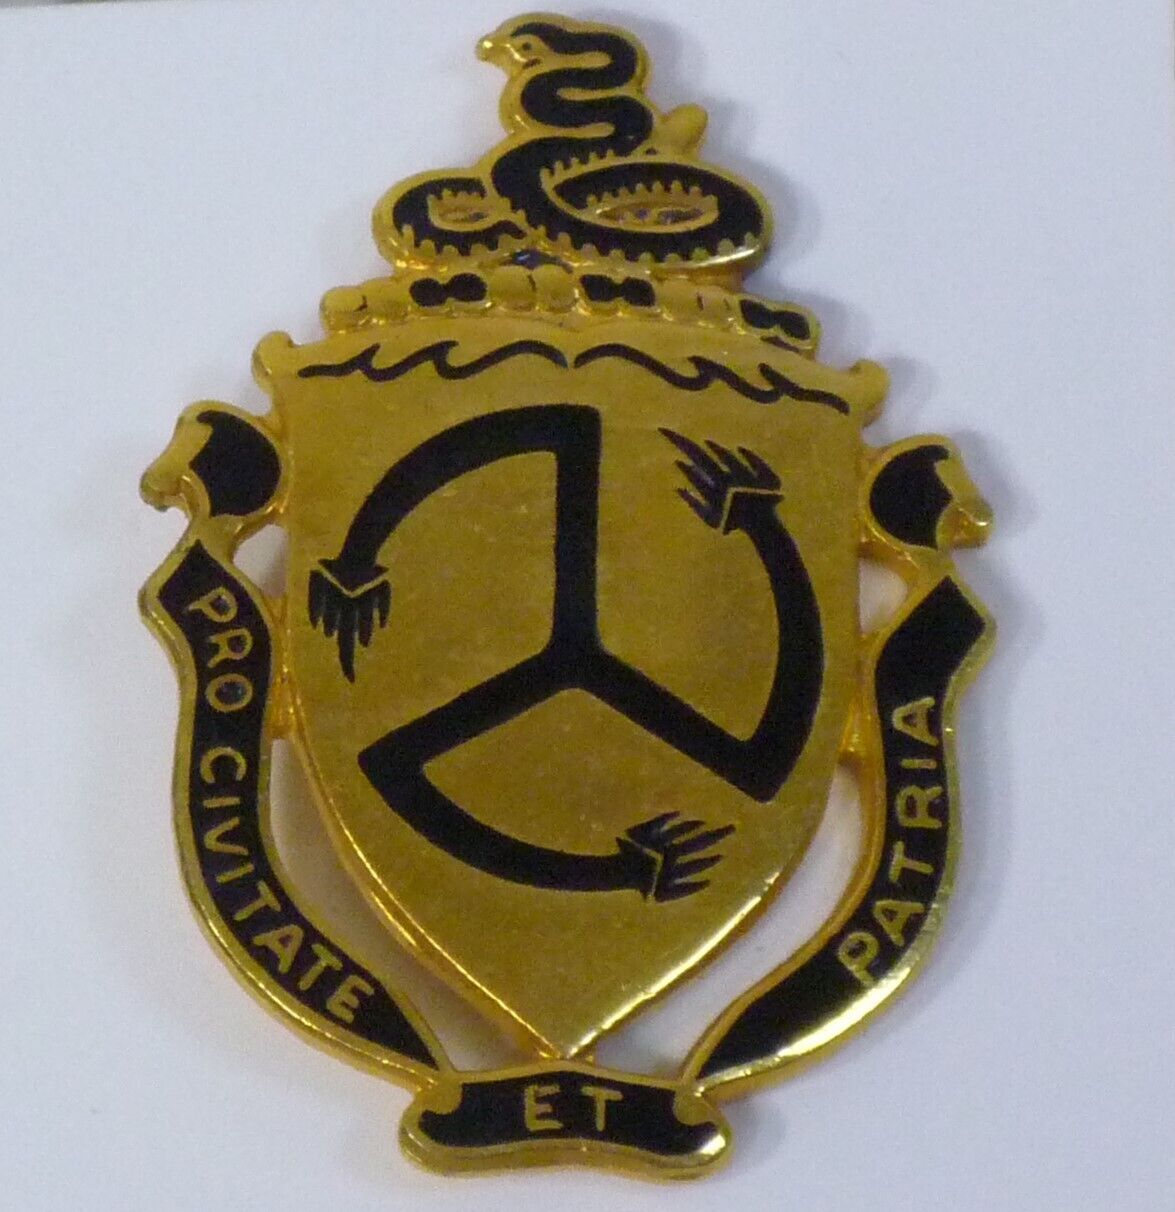 US Army Crest DI/DUI Pin 200th Coast Artillery Regiment Pin